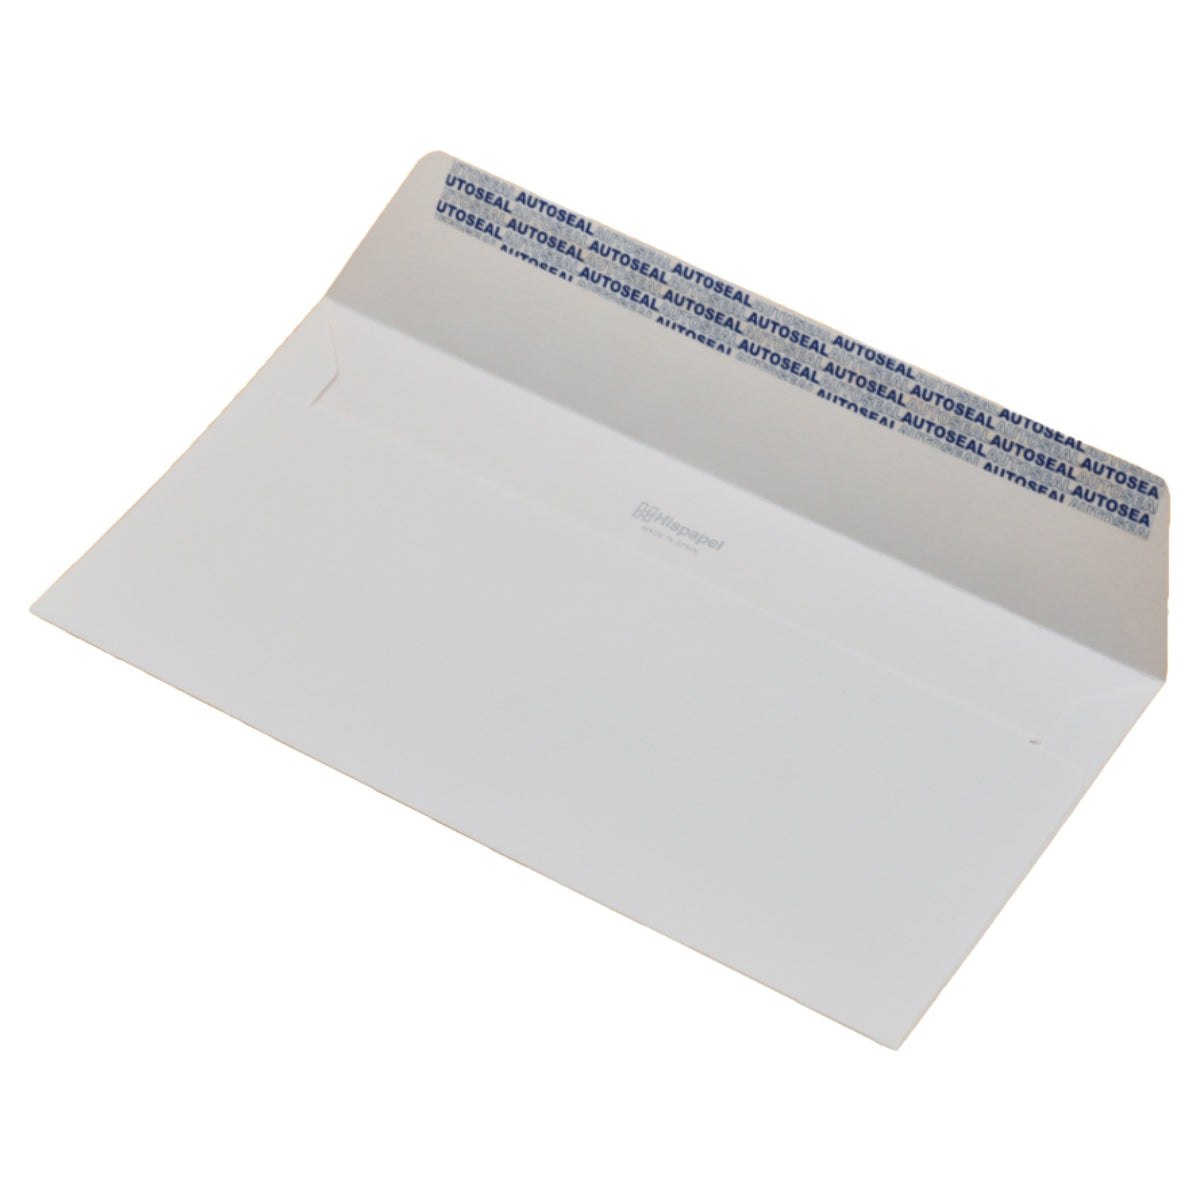 Hispapel Envelope 115 x 225 mm, DL with window, White